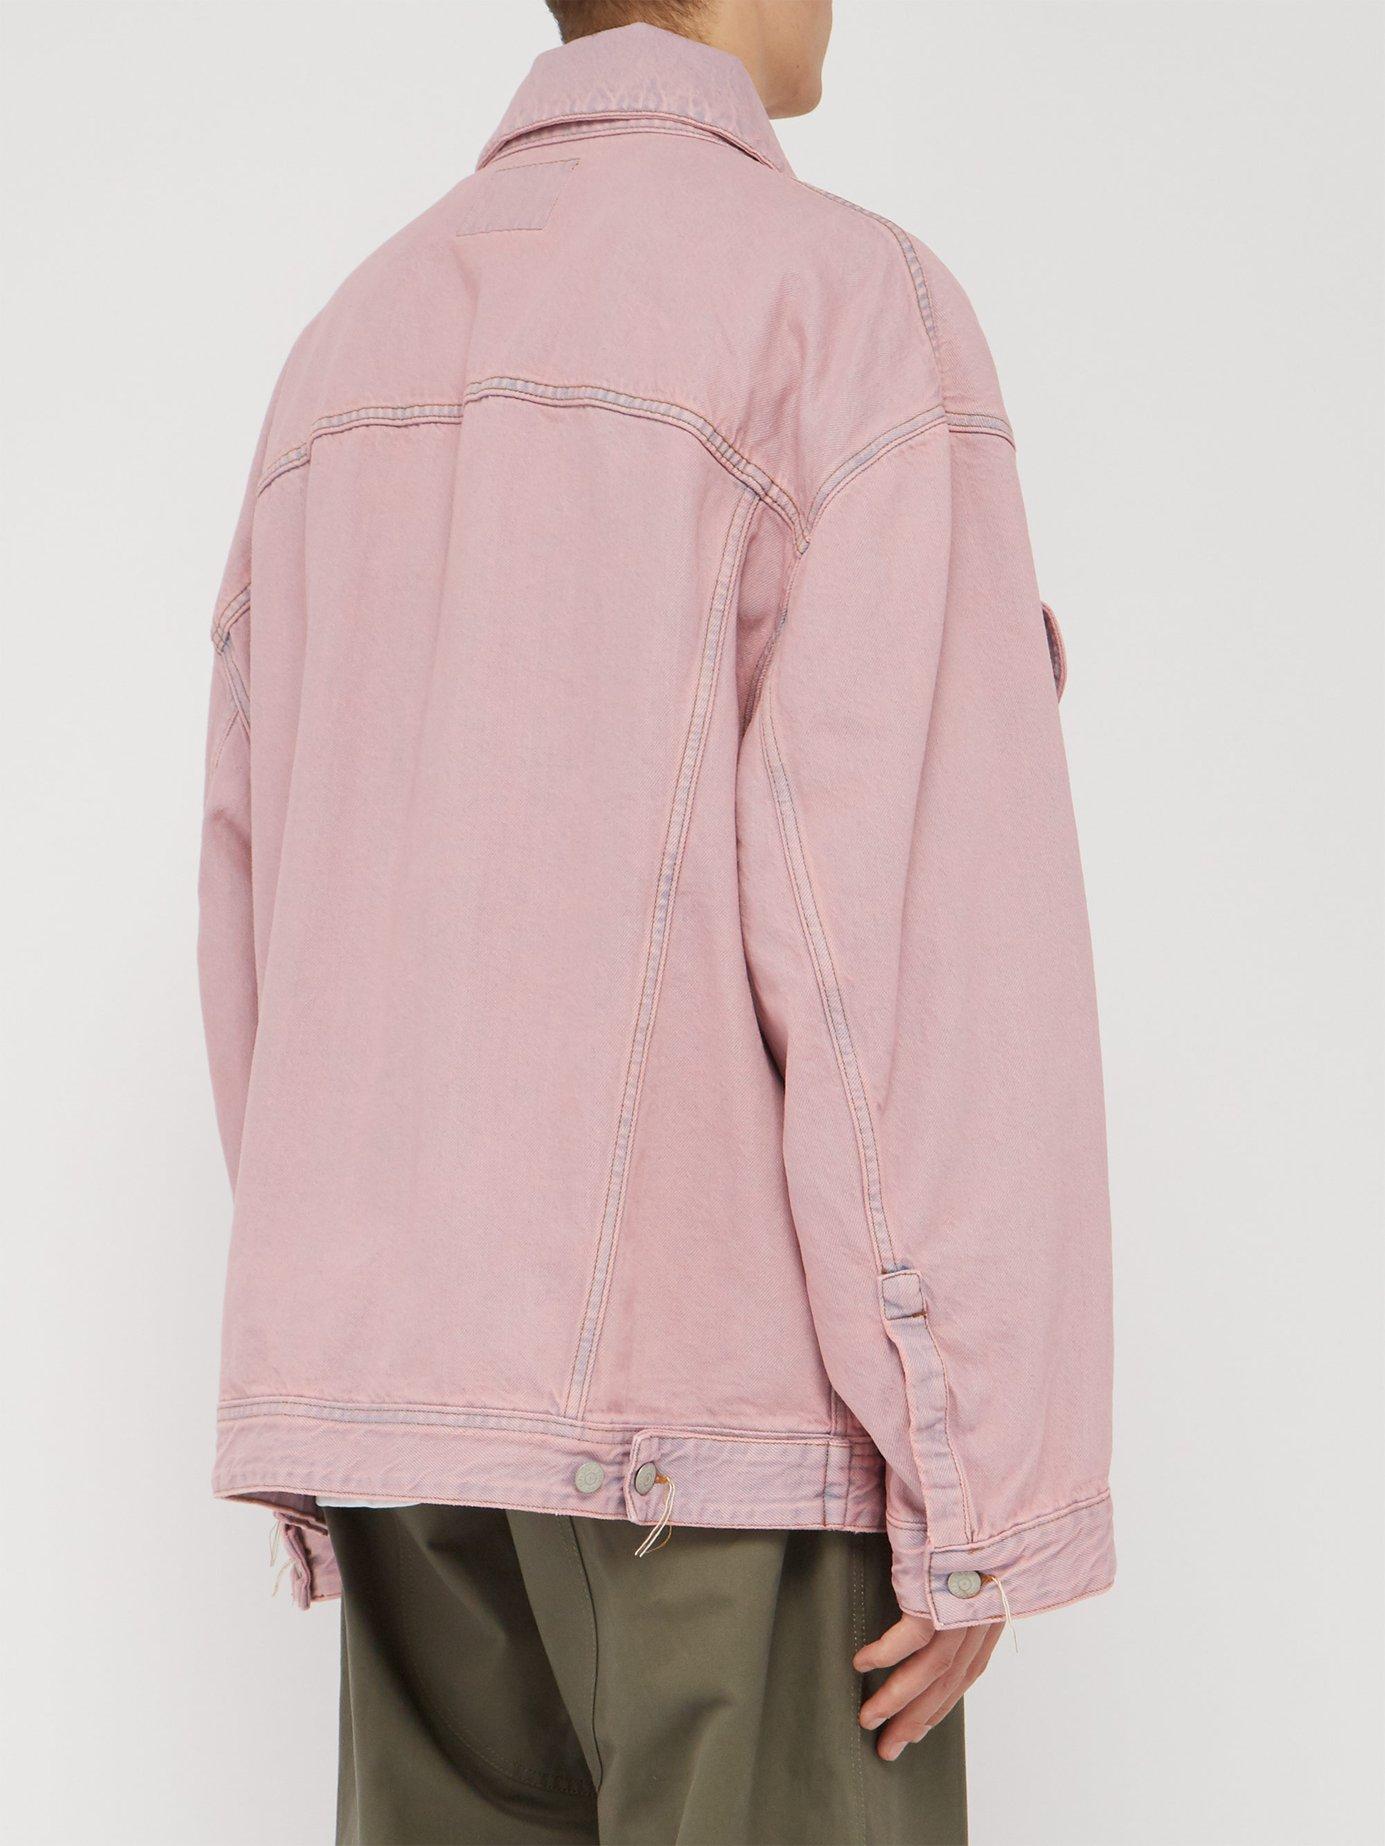 Acne Studios Oversized Denim Jacket in Pink for Men - Lyst